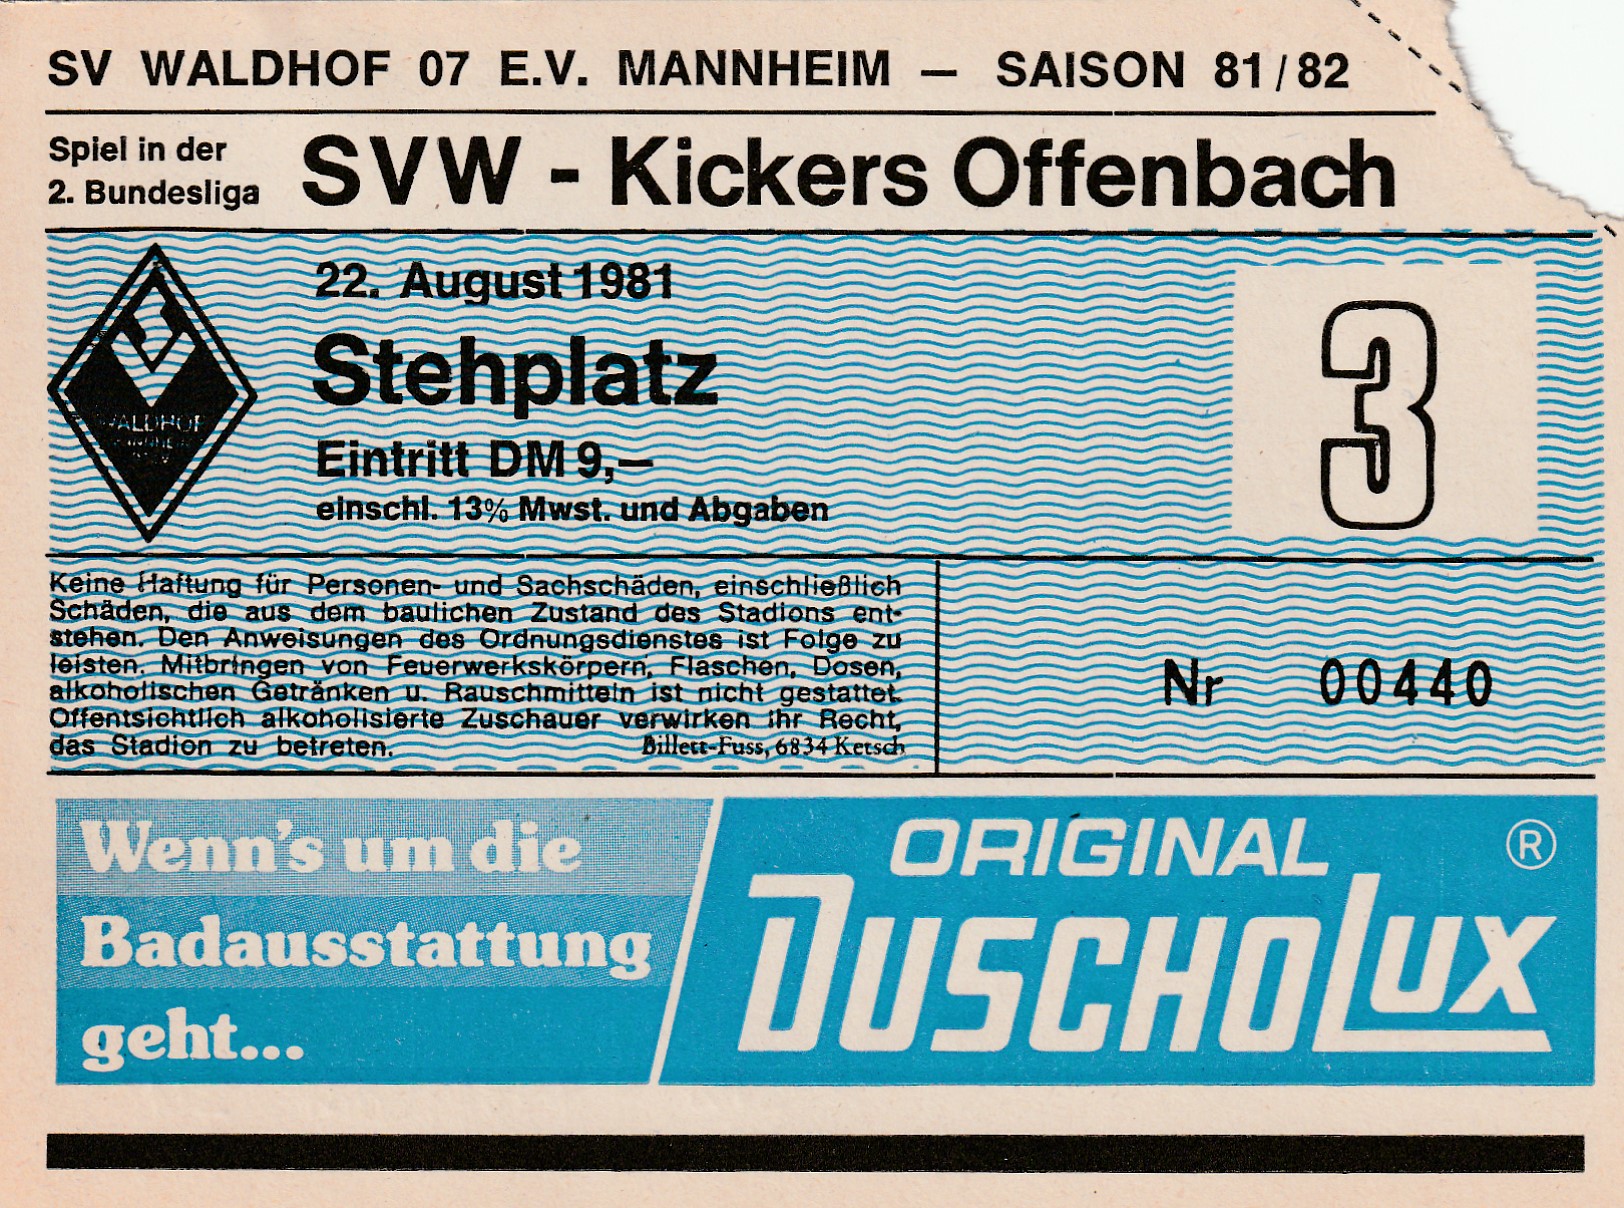 SV Waldhof - Kickers Offenbach 3-1220881.jpeg